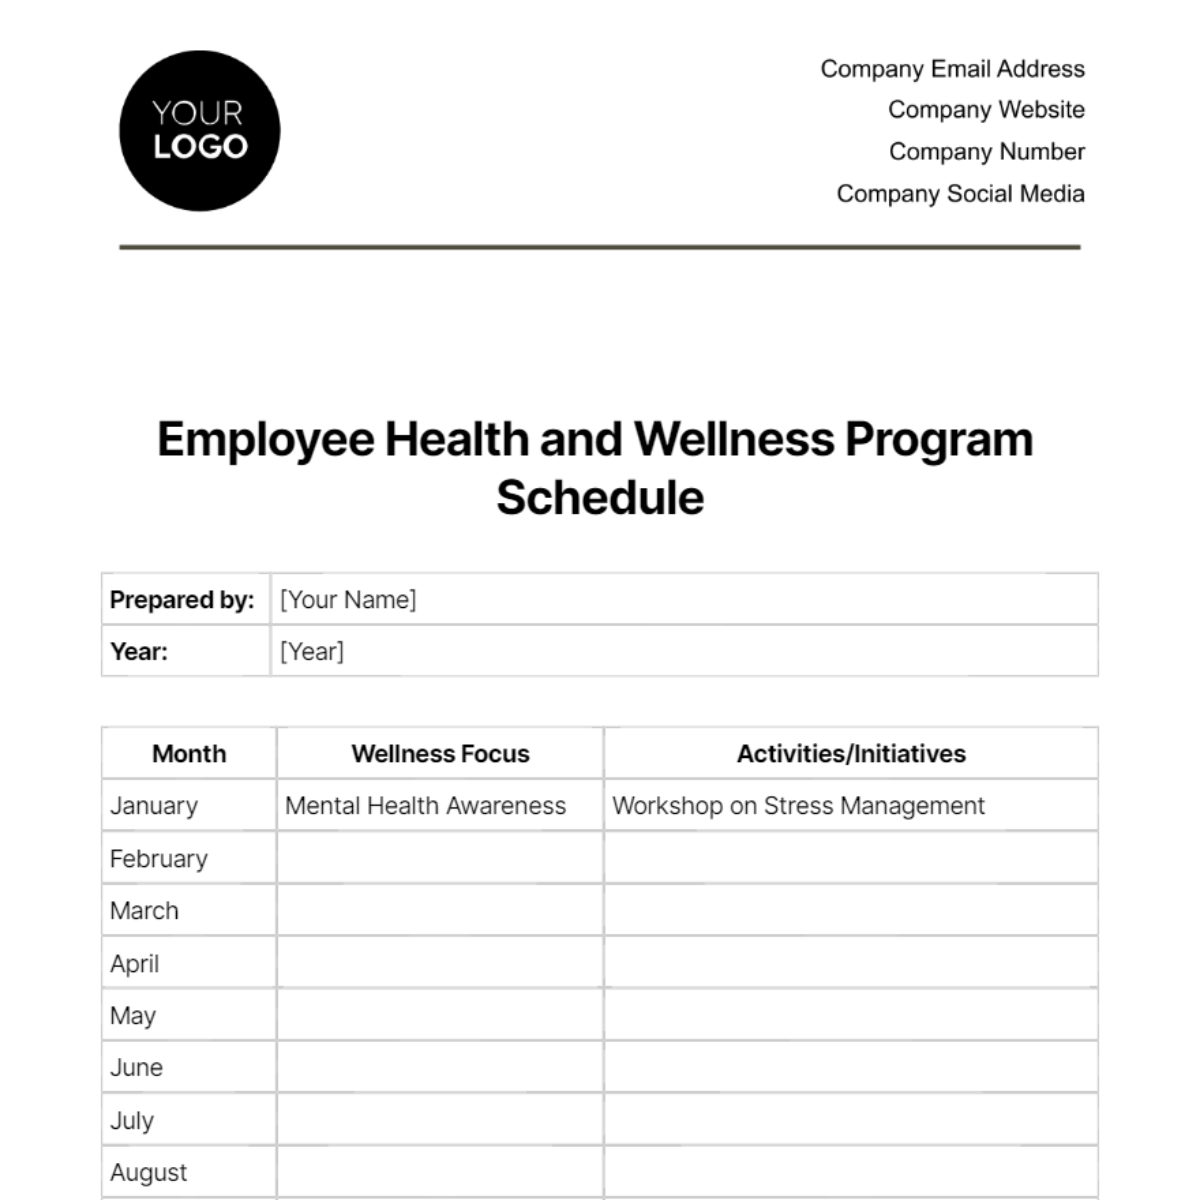 Employee Health and Wellness Program Schedule Template